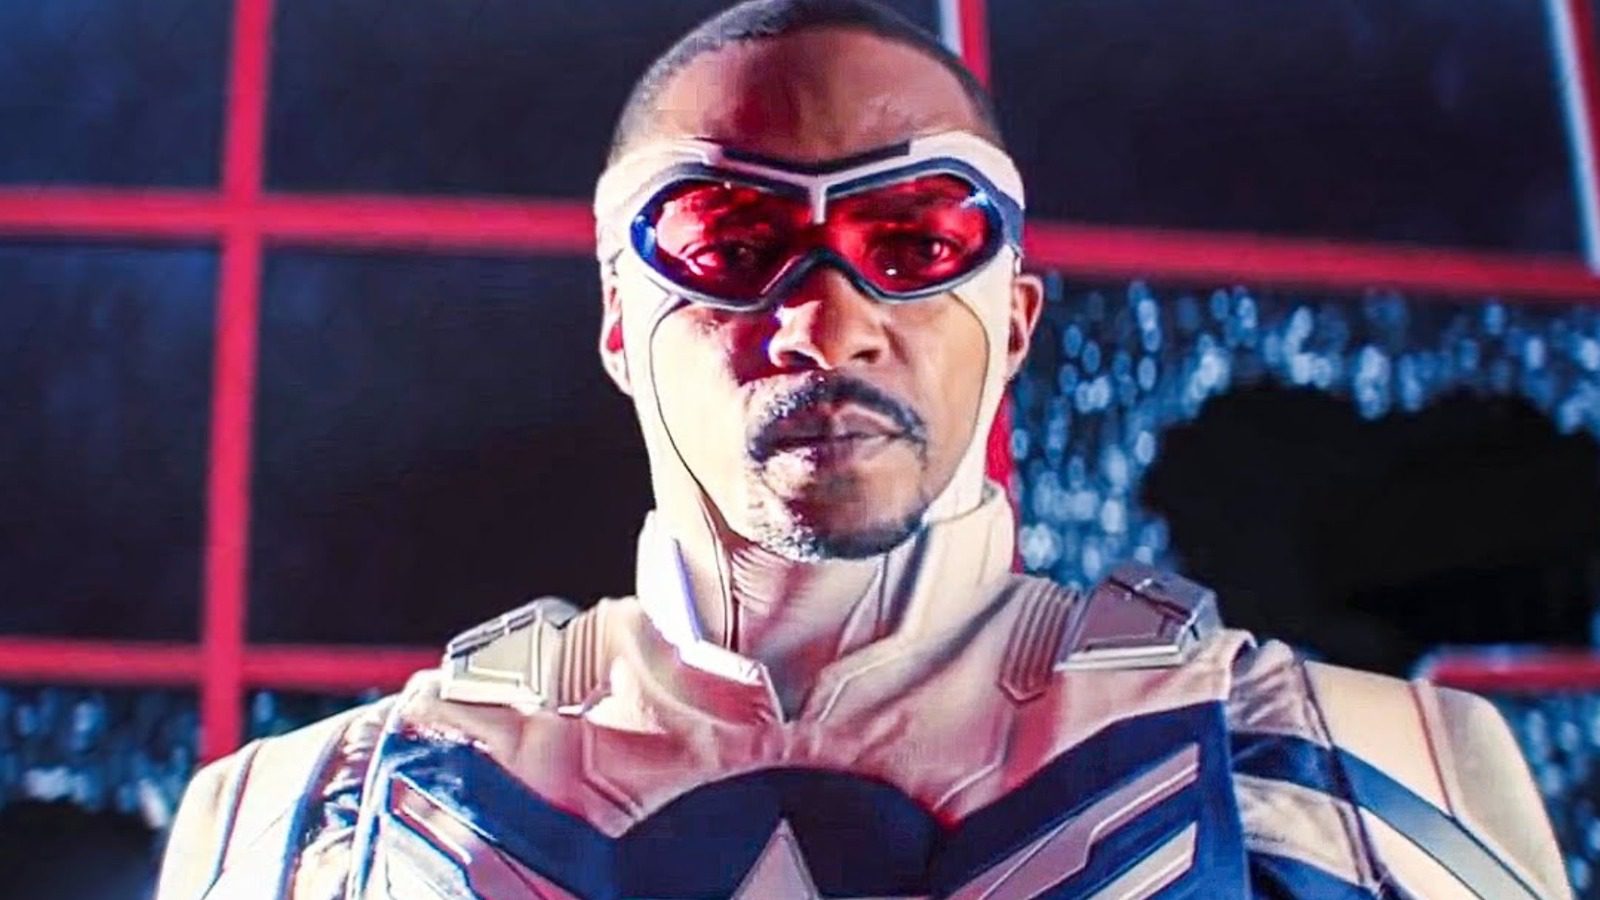 Captain America 4 Set Photo Teases The Return Of A Sinister Marvel Organization